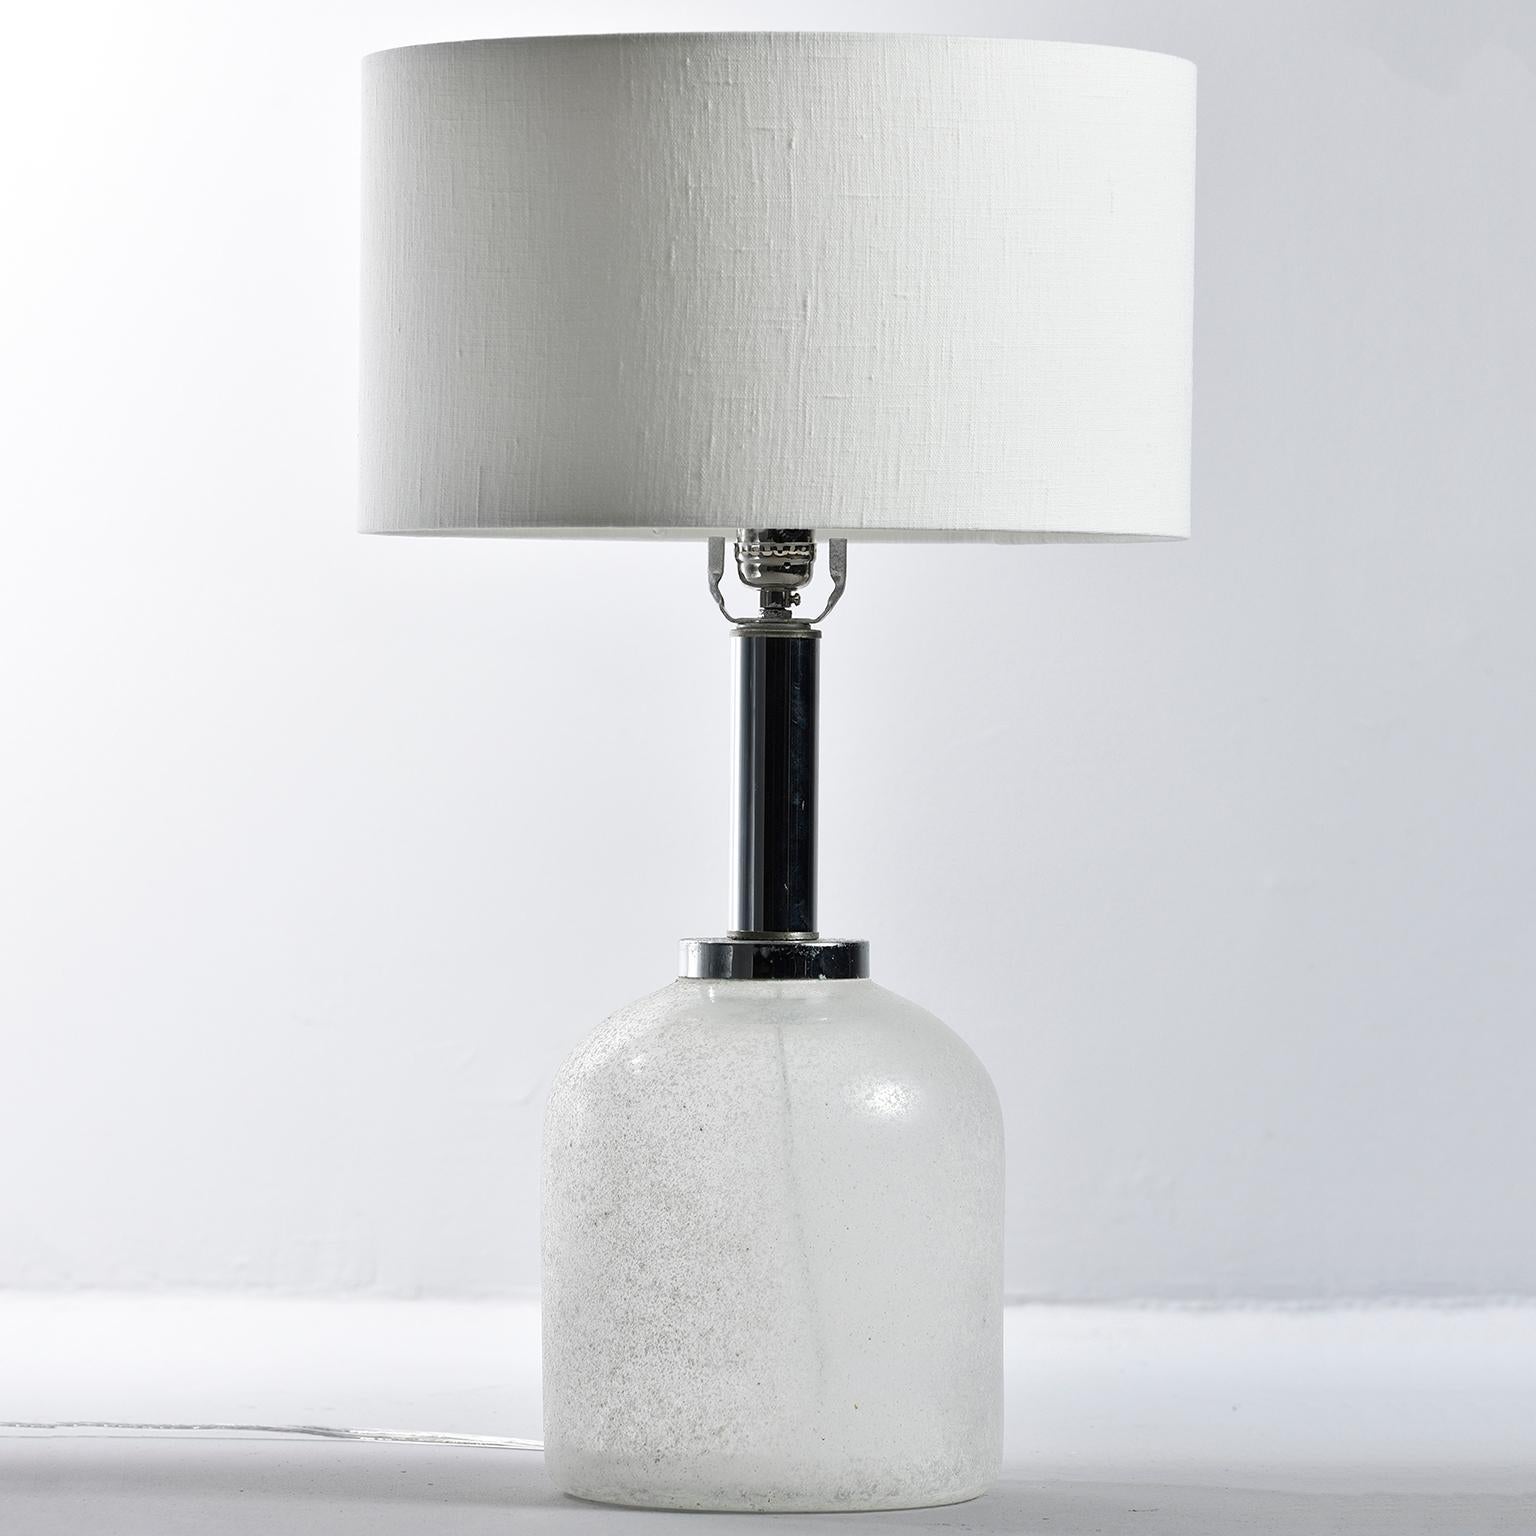 Seguso Vetri d'Arte Lampe aus weißem Murano-Glas im Scavo-Stil (Muranoglas) im Angebot